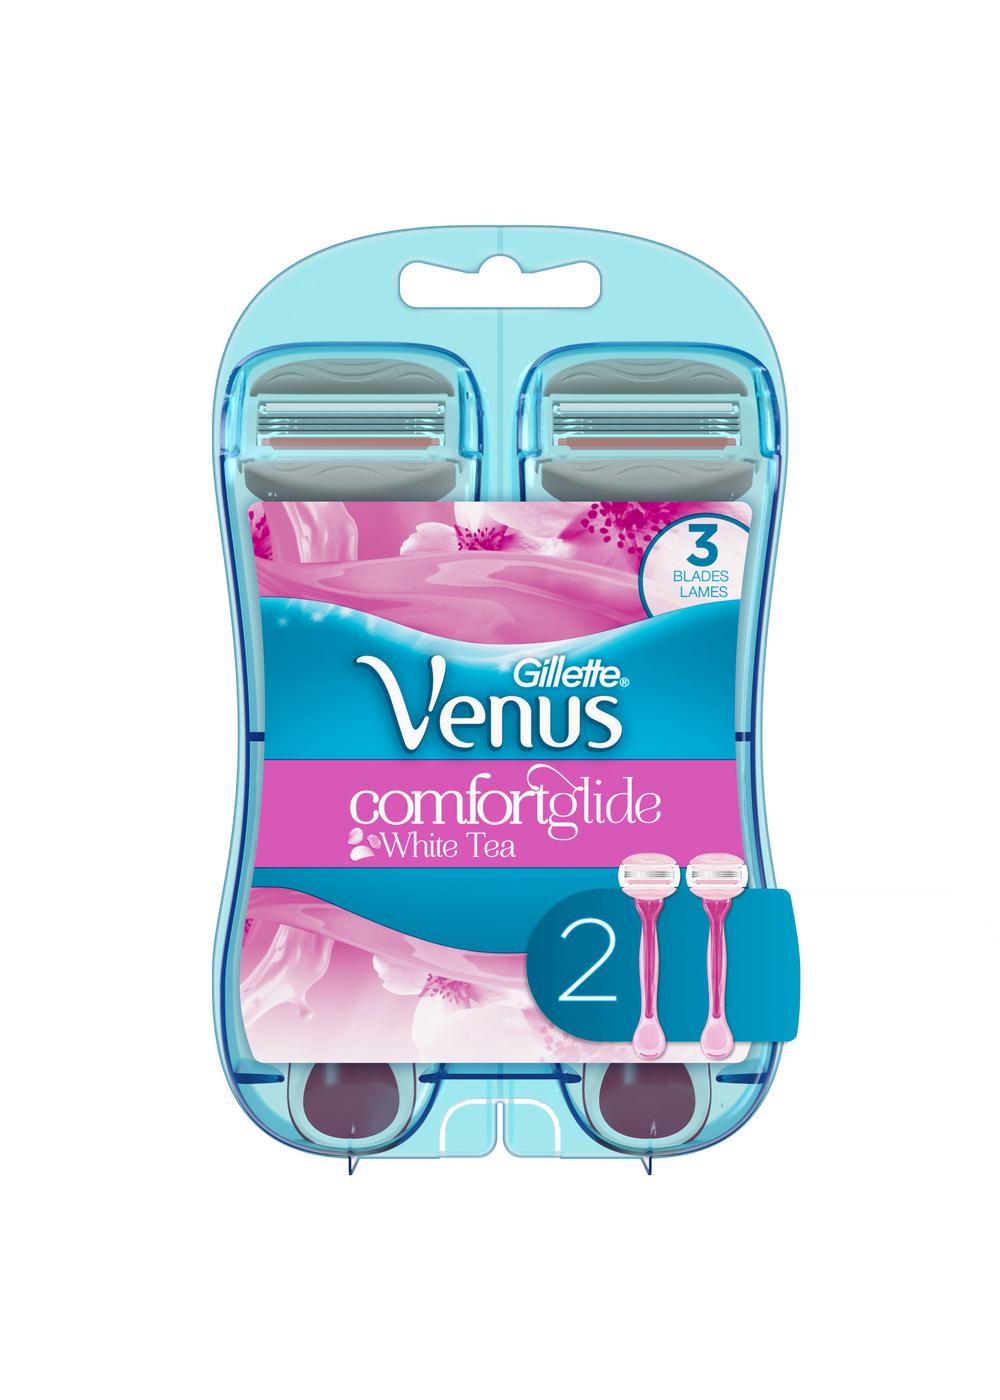 Gillette Venus ComfortGlide White Tea Disposable Razors; image 6 of 10